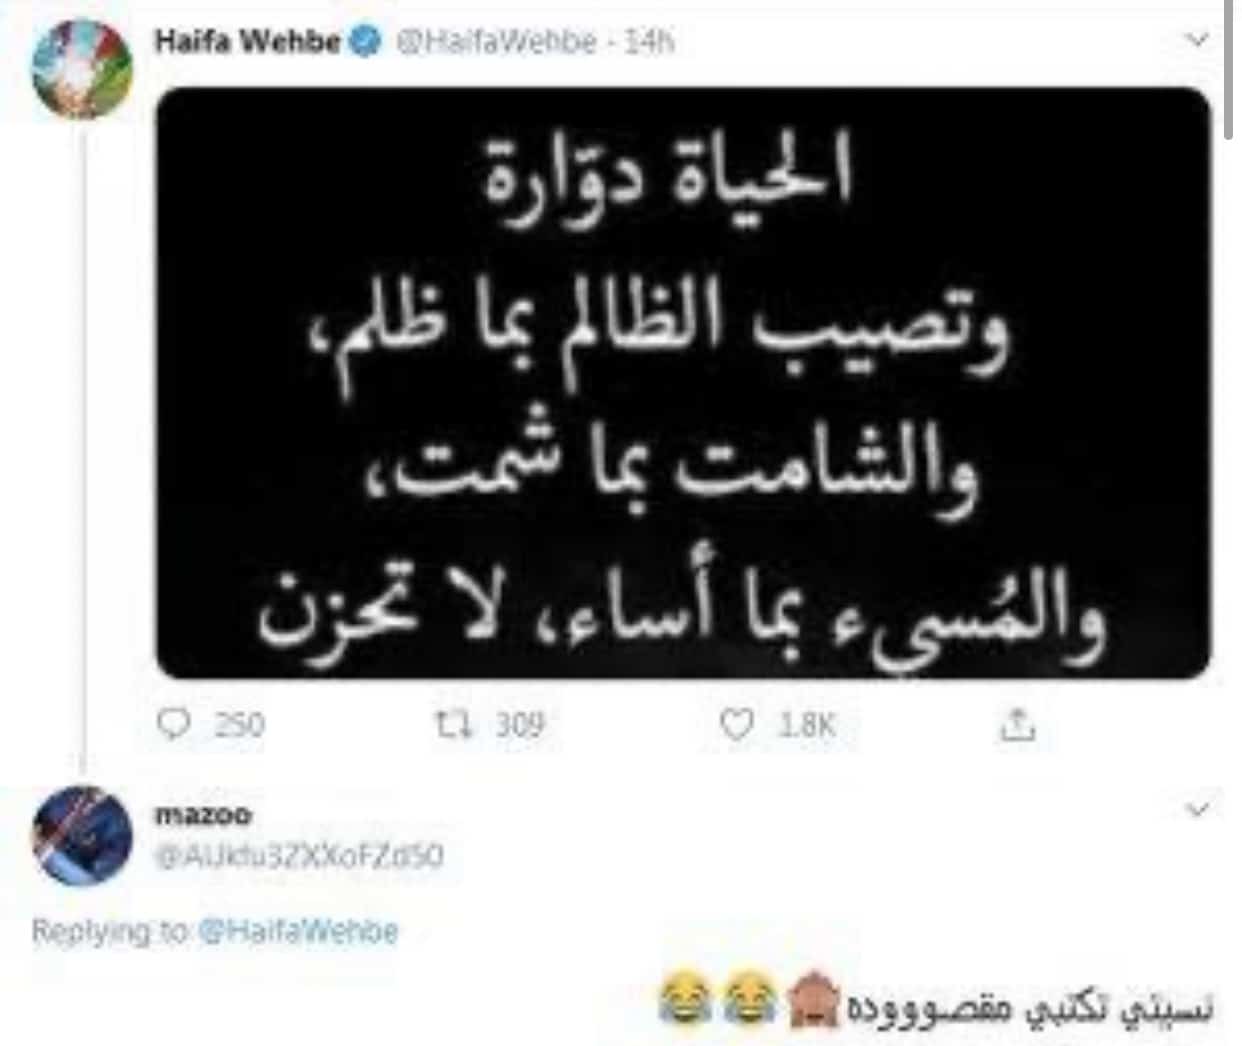 Si Haifa Wehbe nalipay bahin sa eskandalo ni Ahmed Abu Hashima